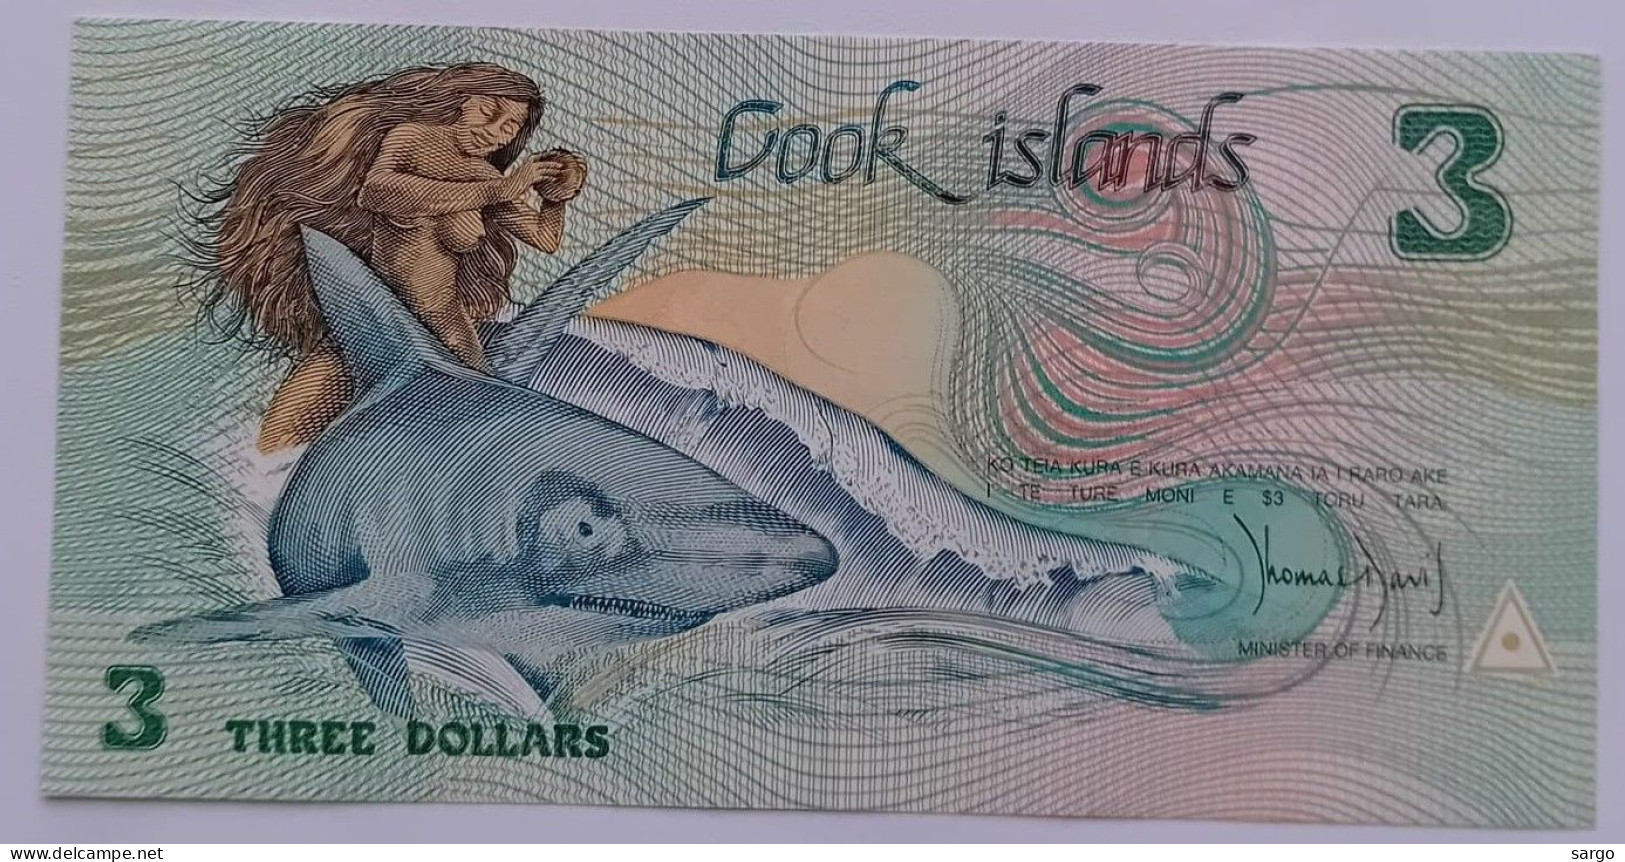 COOK ISLANDS - 3 DOLLARS - 1992 - UNC - P 6  - BANKNOTES - PAPER MONEY - CARTAMONETA - - Cook